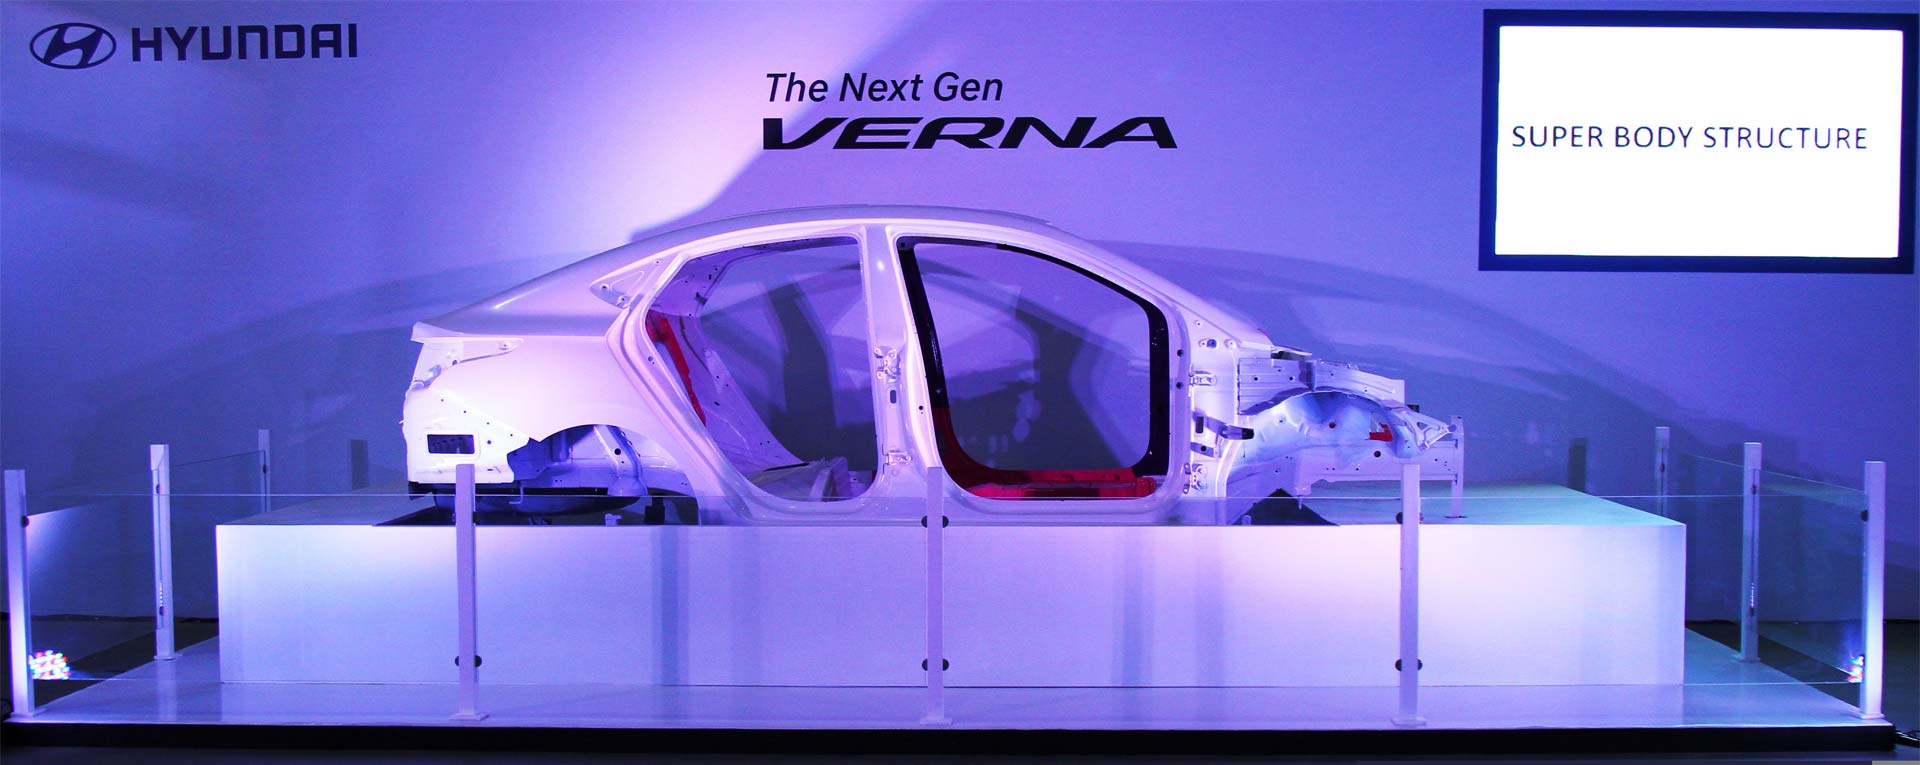 2017-Hyundai-Verna-facelift-super-body-structure